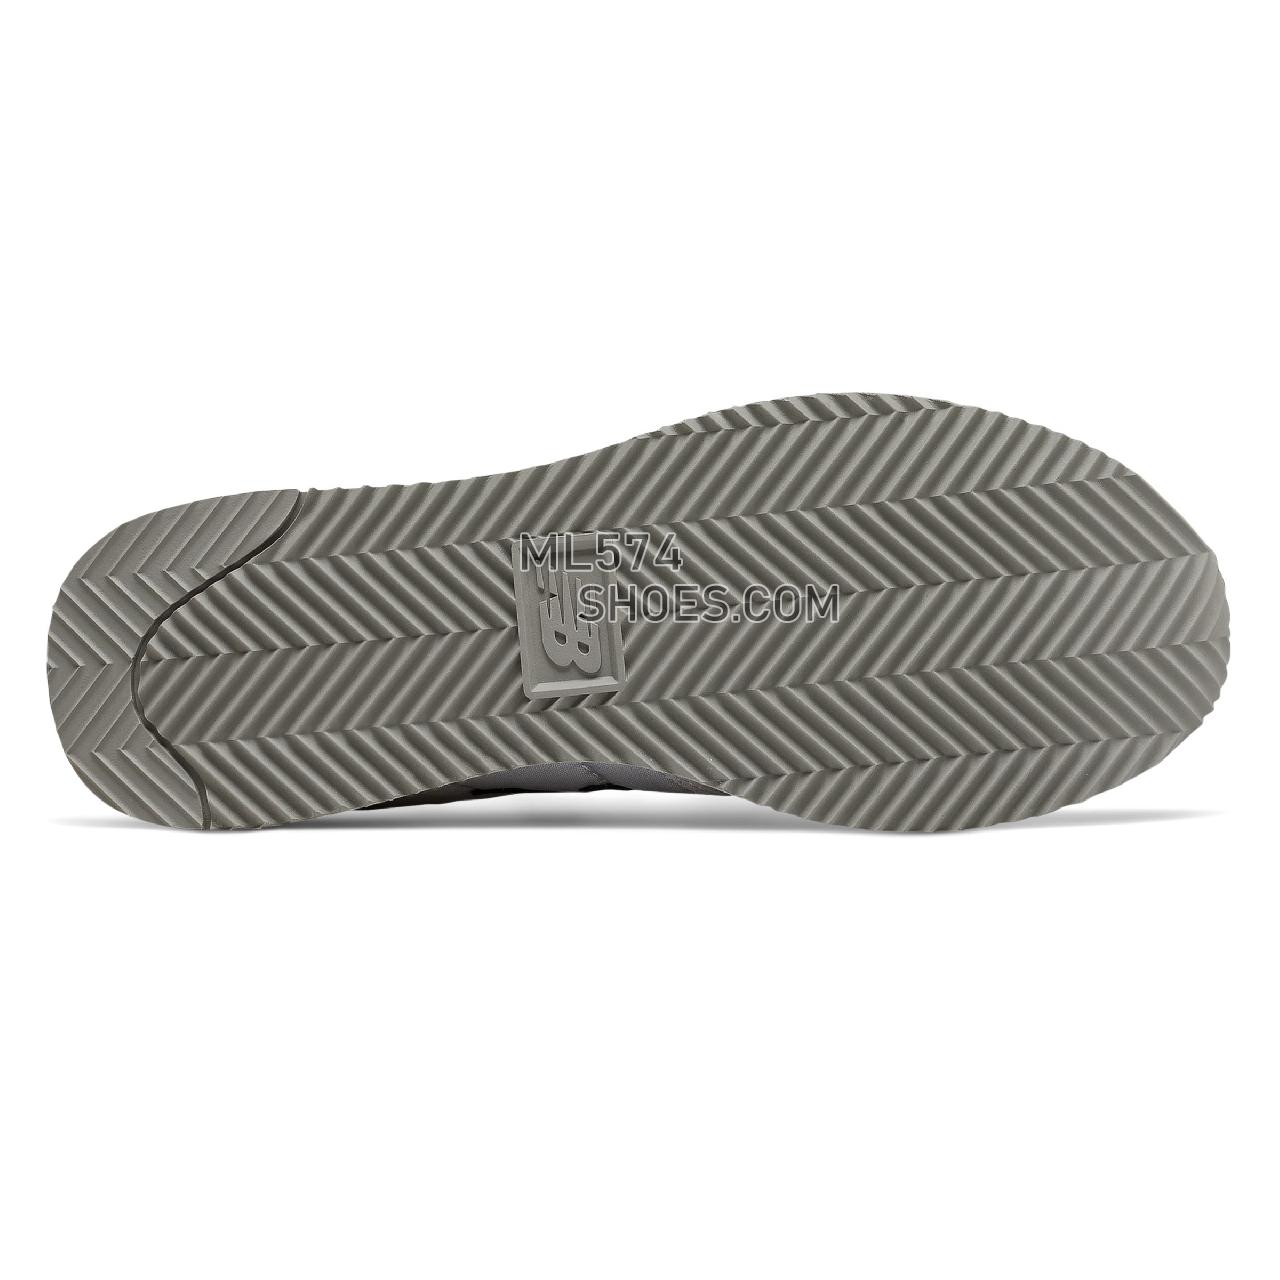 New Balance 720 - Women's Classic Sneakers - Light Aluminum with Jewel - WL720EE